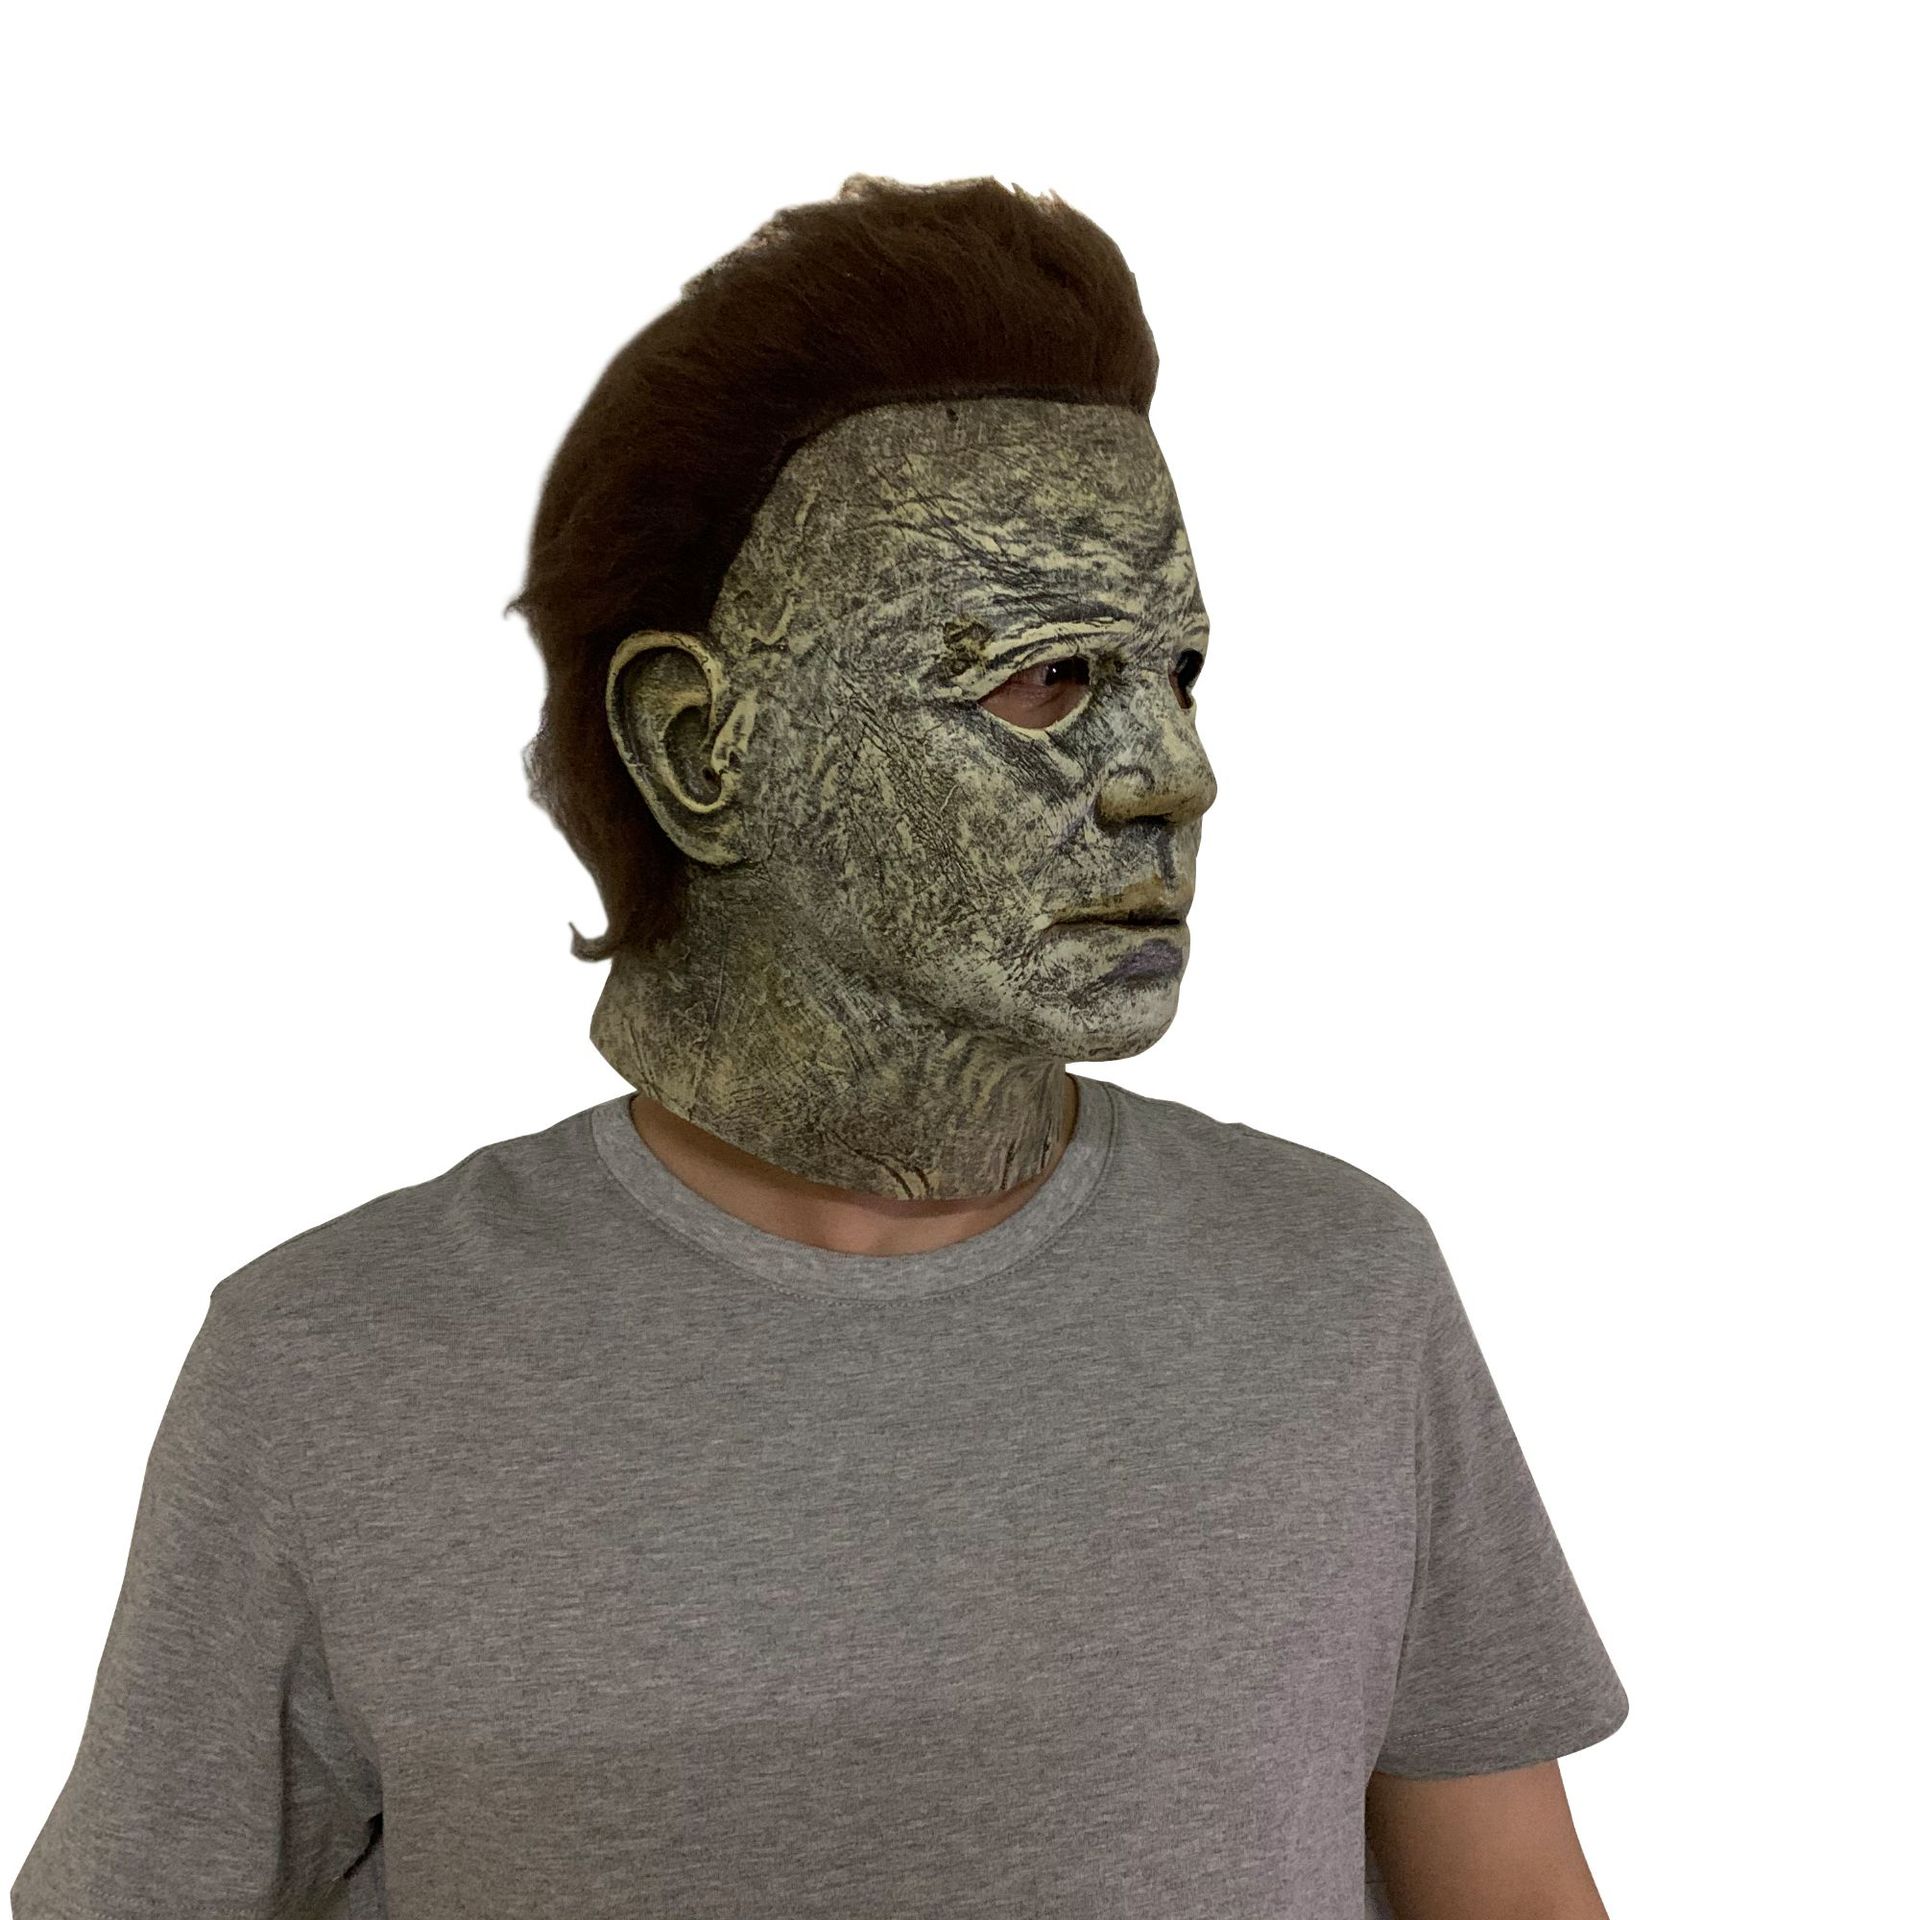 Myers Mask For | Mask Kingdom